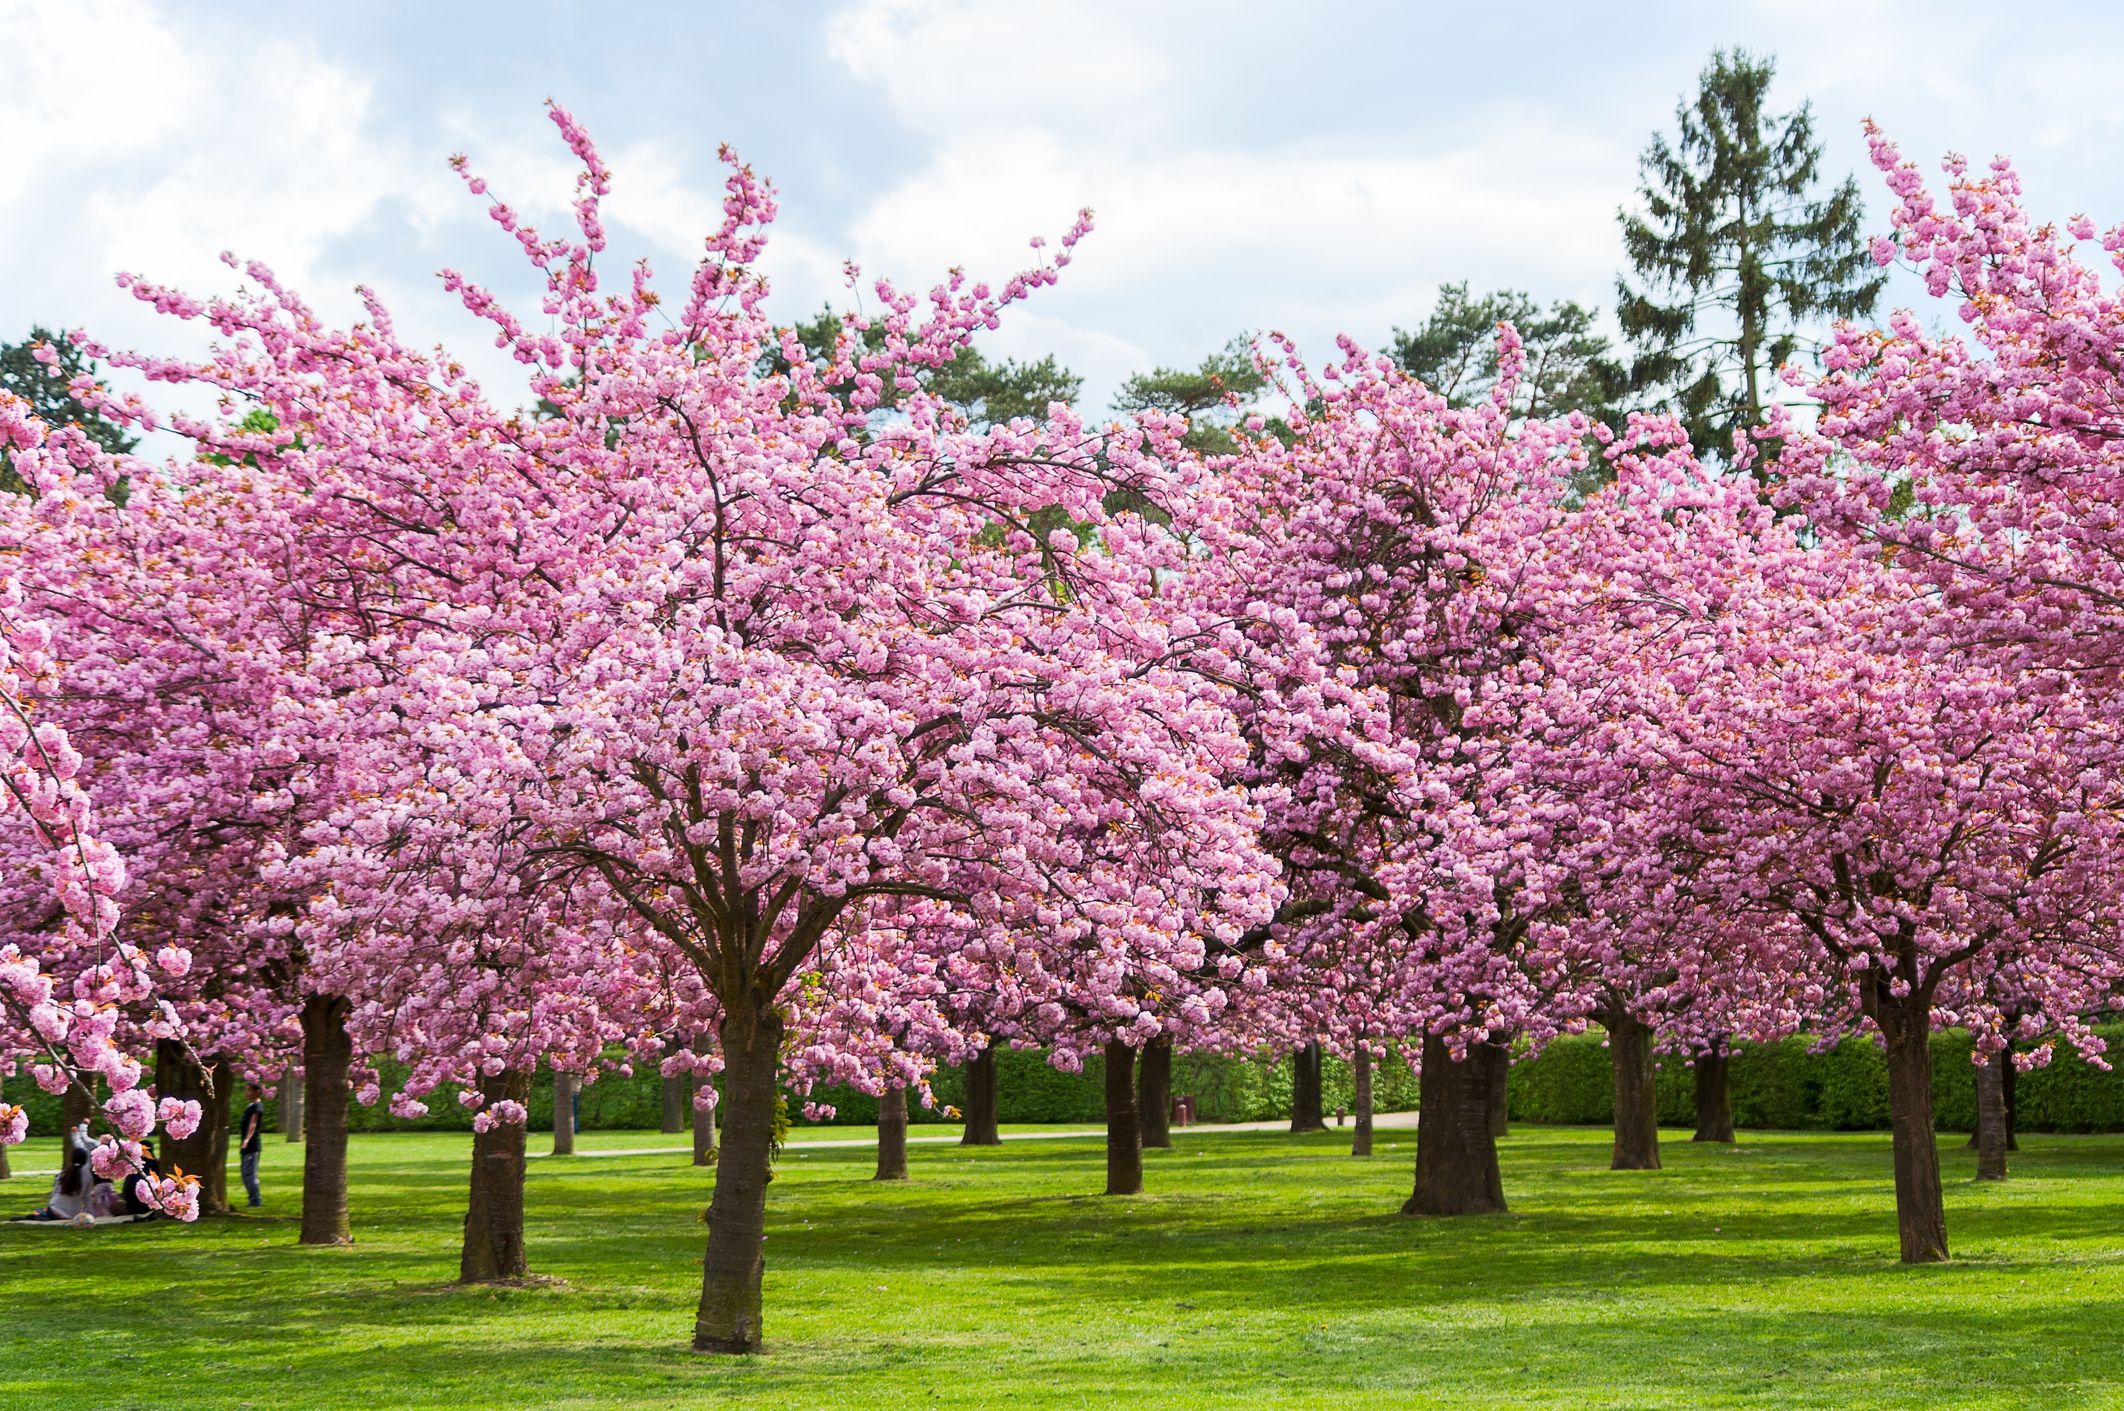 Vancouver's massive Cherry Blossom Festival returns April 2020. Sell